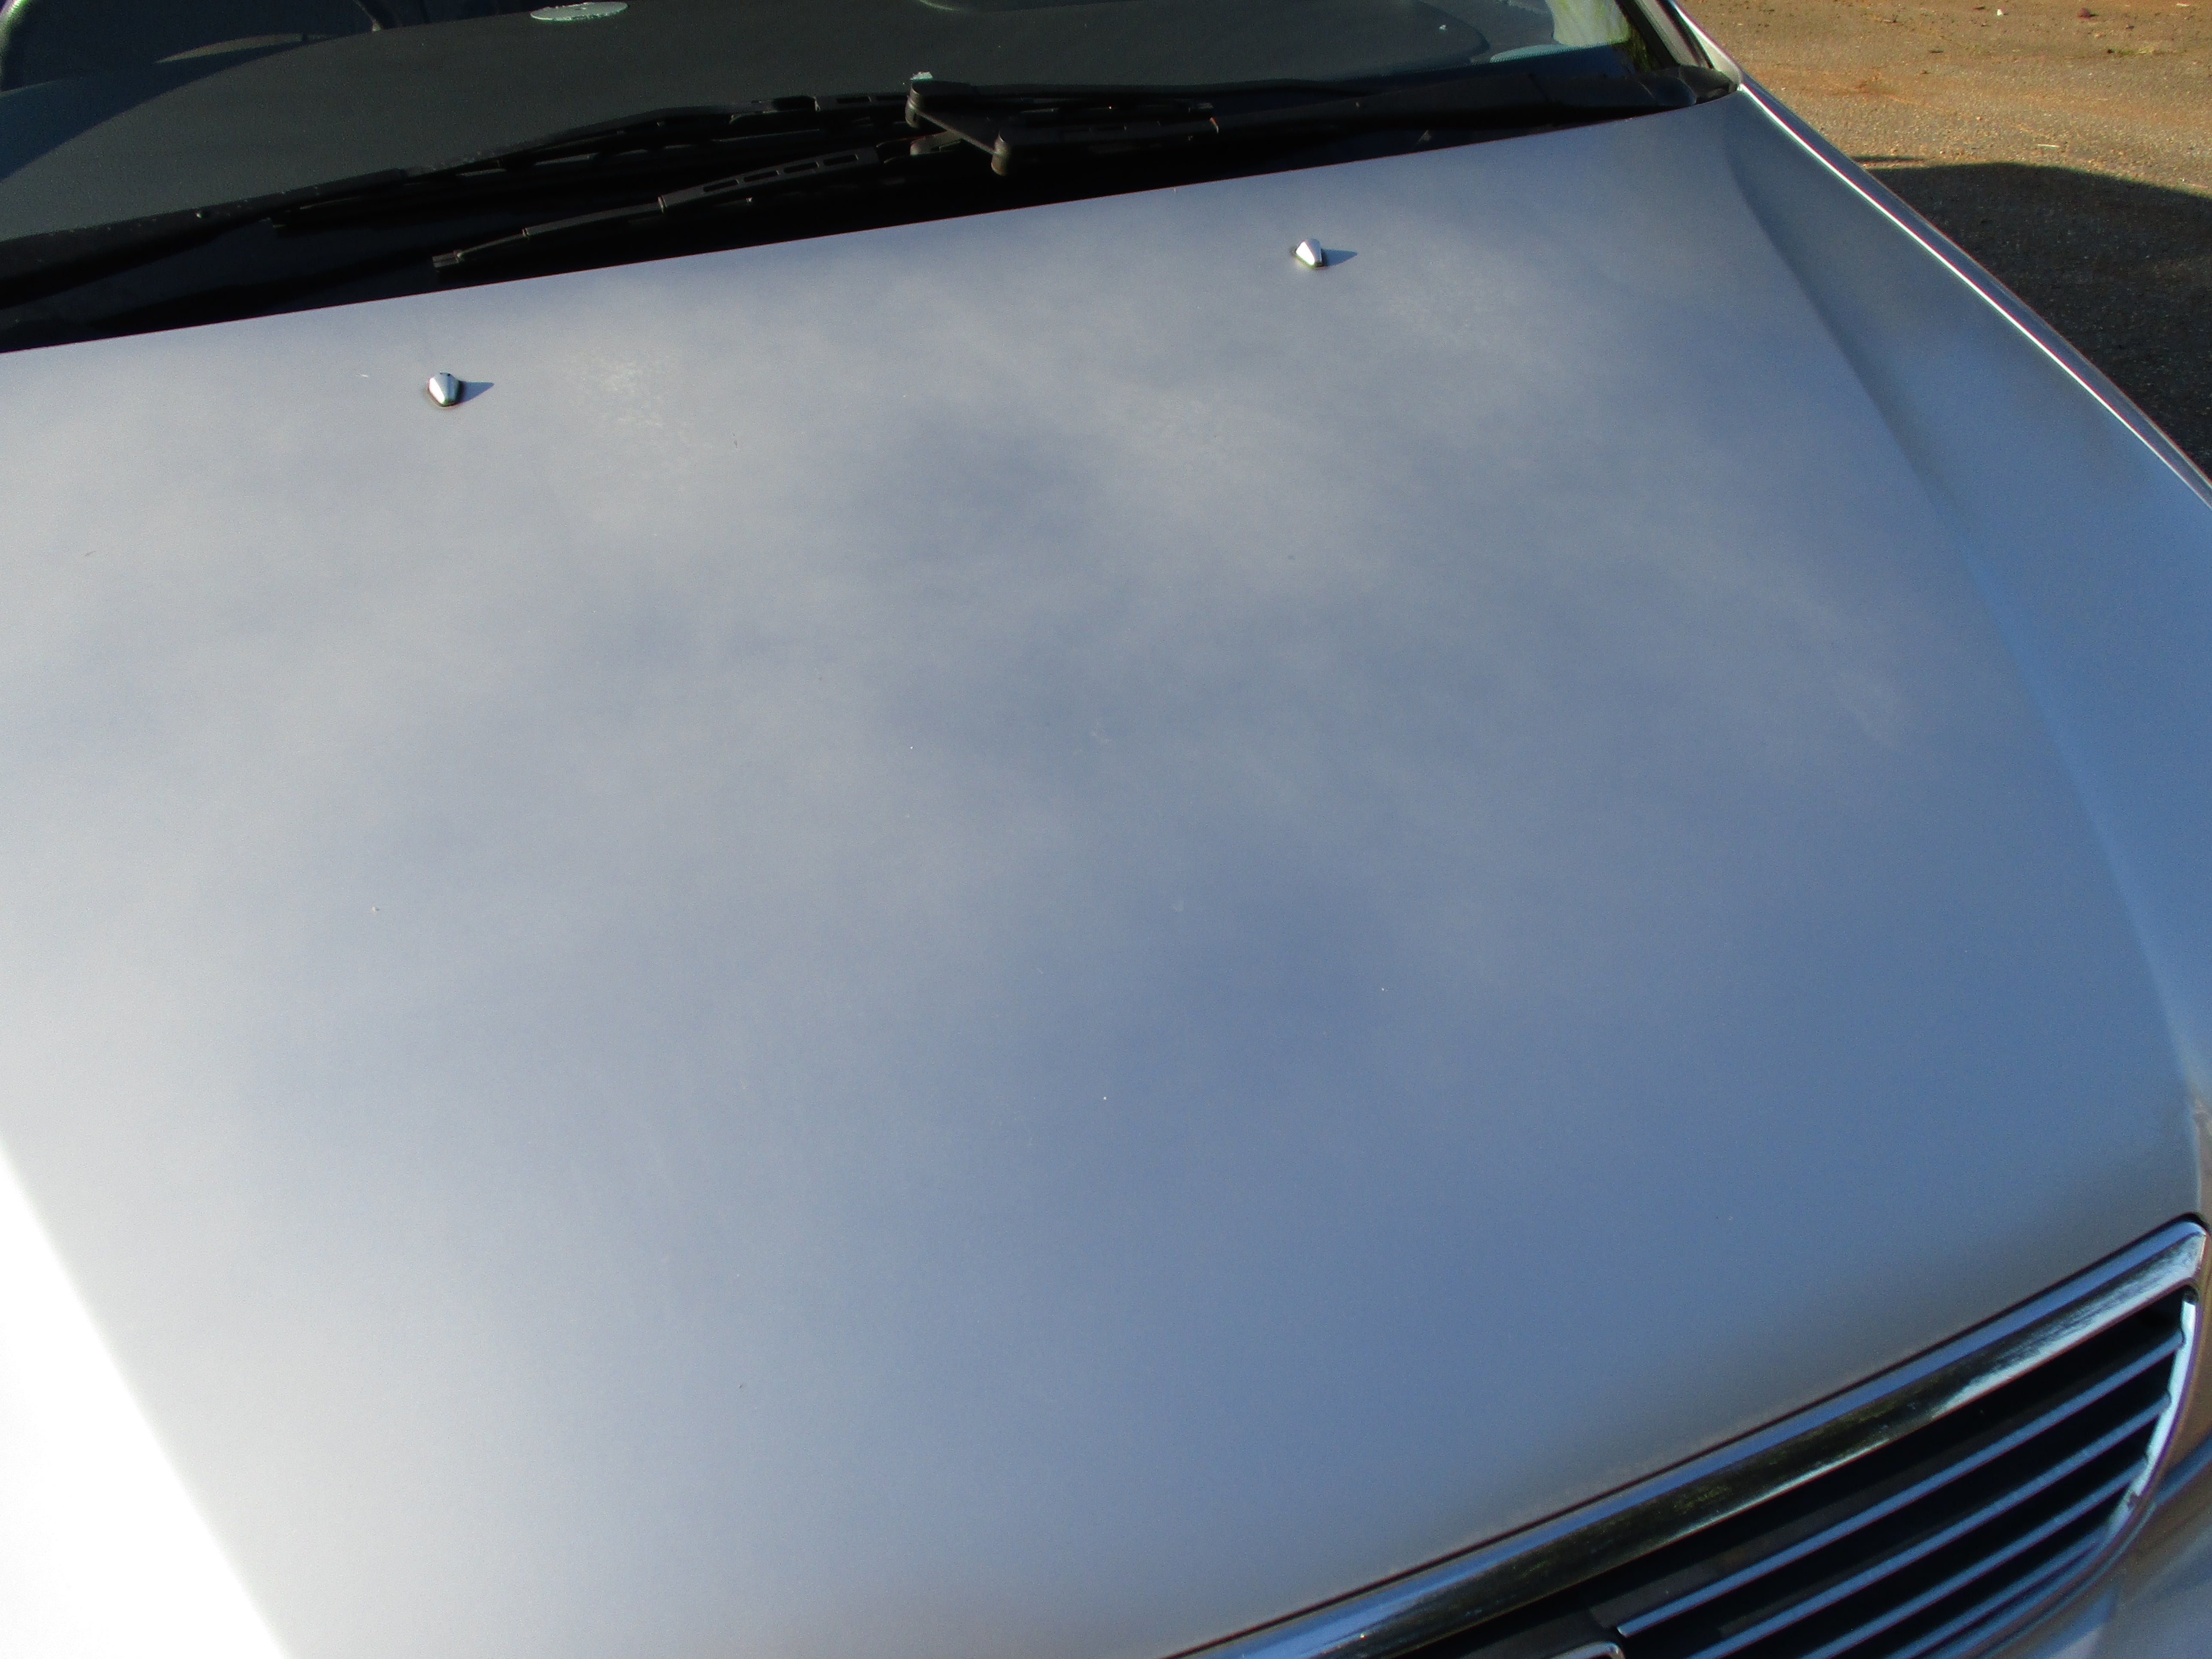 JDM 96 Honda Odyssey Fully Loaded Bubble Top Panoramic Roof 4WD RHD Van Rare